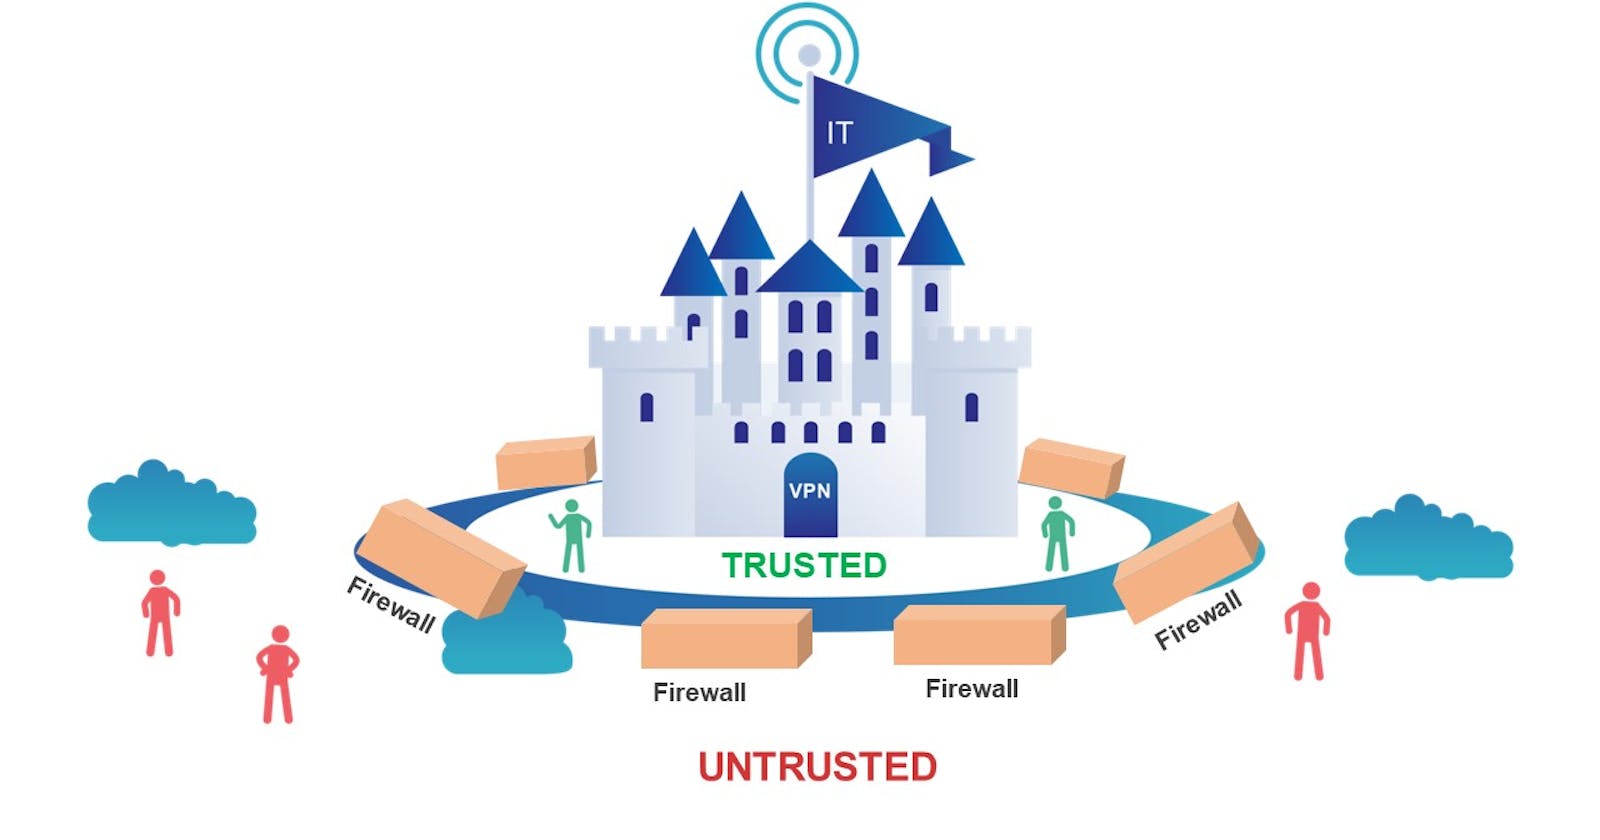 Zero Trust Model